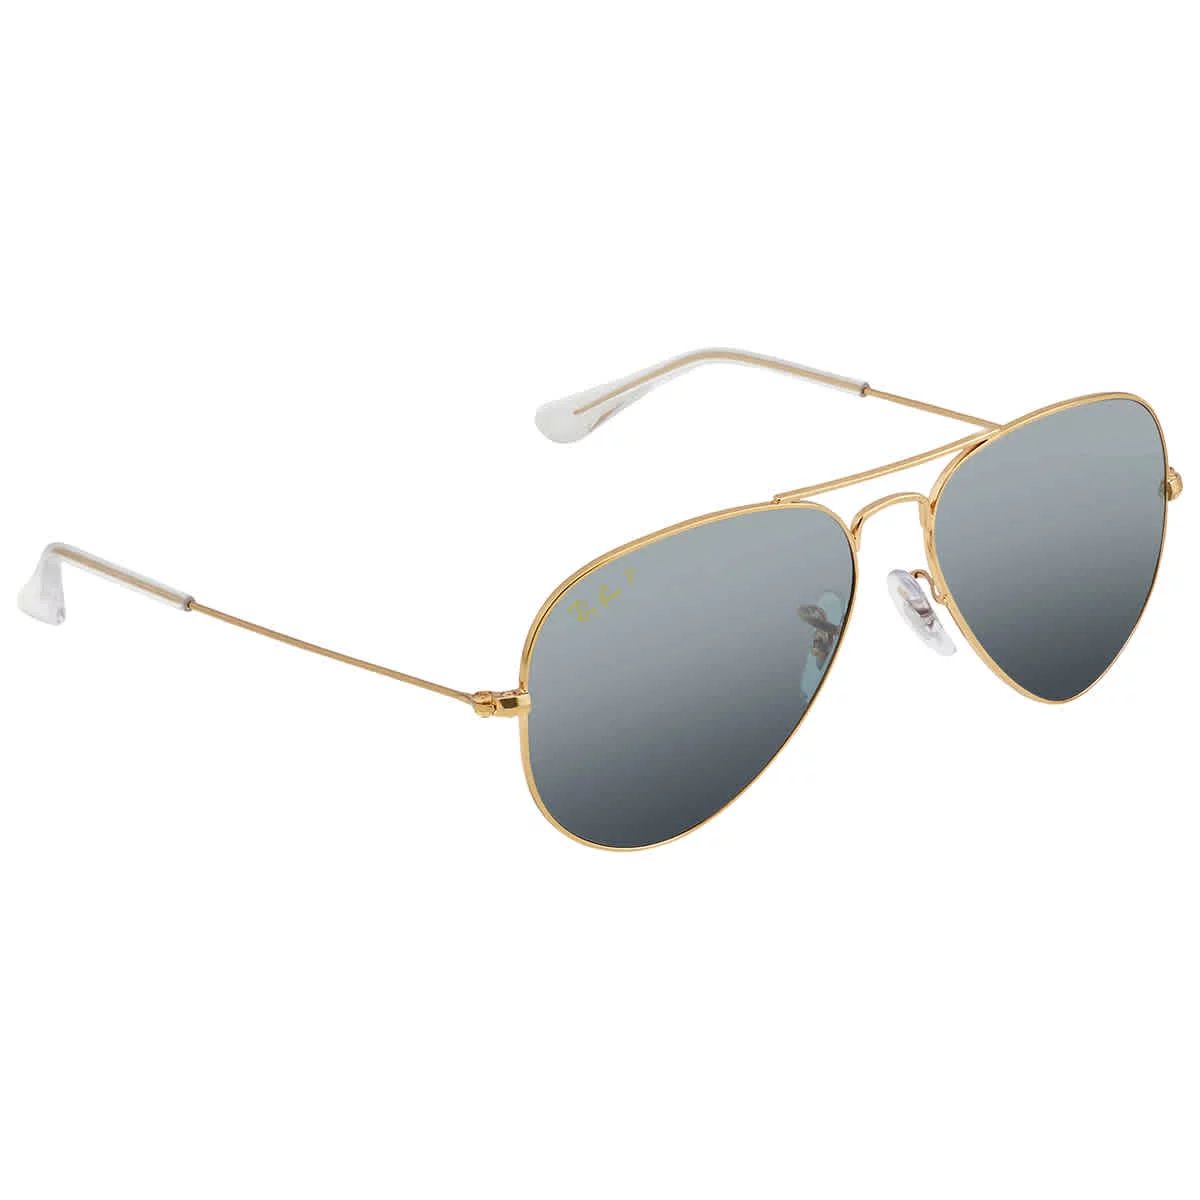 Ray Ban Aviator Chromance Polarized Silver/Blue Mirror Unisex Sunglasses RB3025 9196G6 55 | Walmart (US)